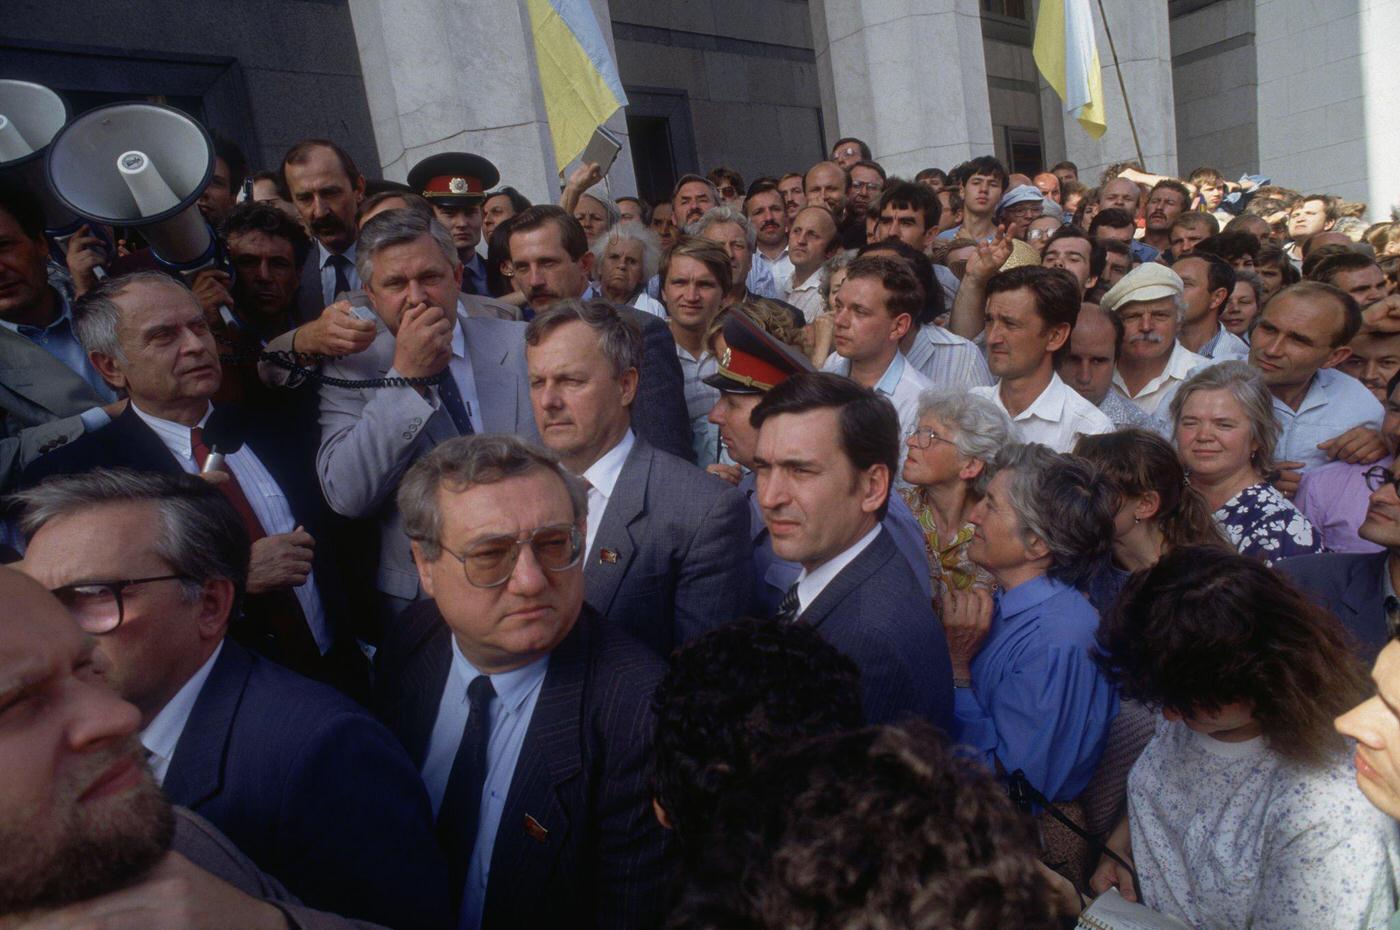 Politicians Attend Demonstration in Kiev After Ukrainian Independence, 1991